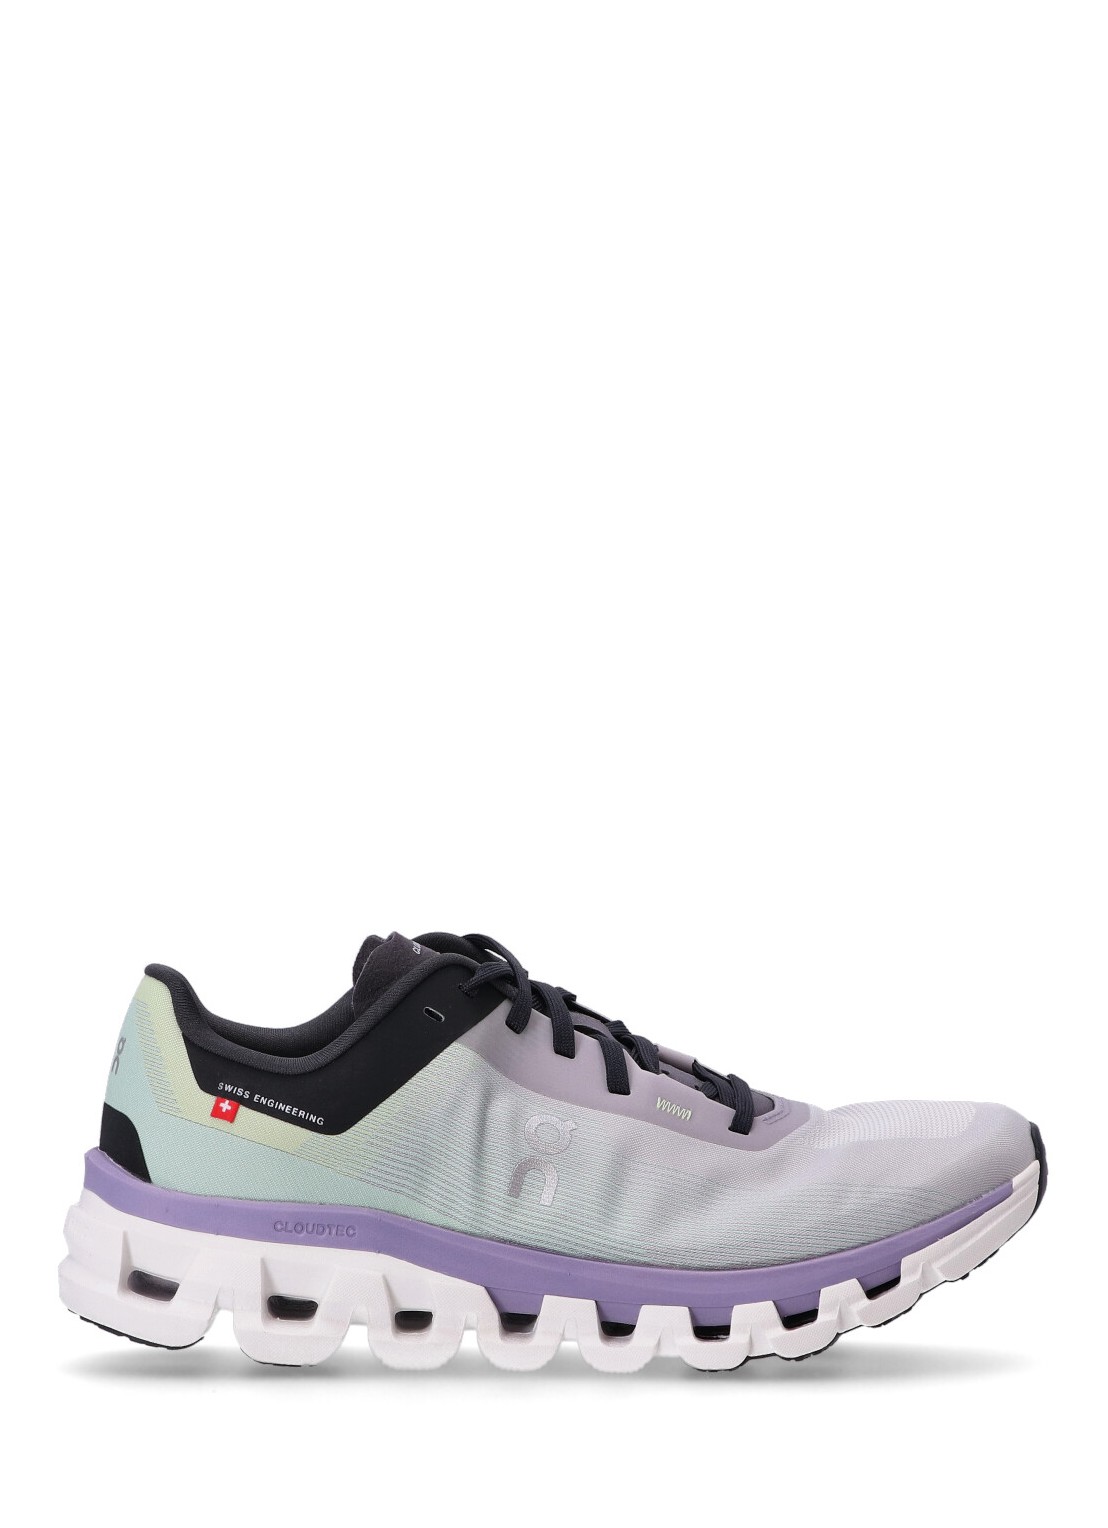 Sneaker on running sneaker woman cloudflow 4 3wd30111501 fade wisteria talla 37
 